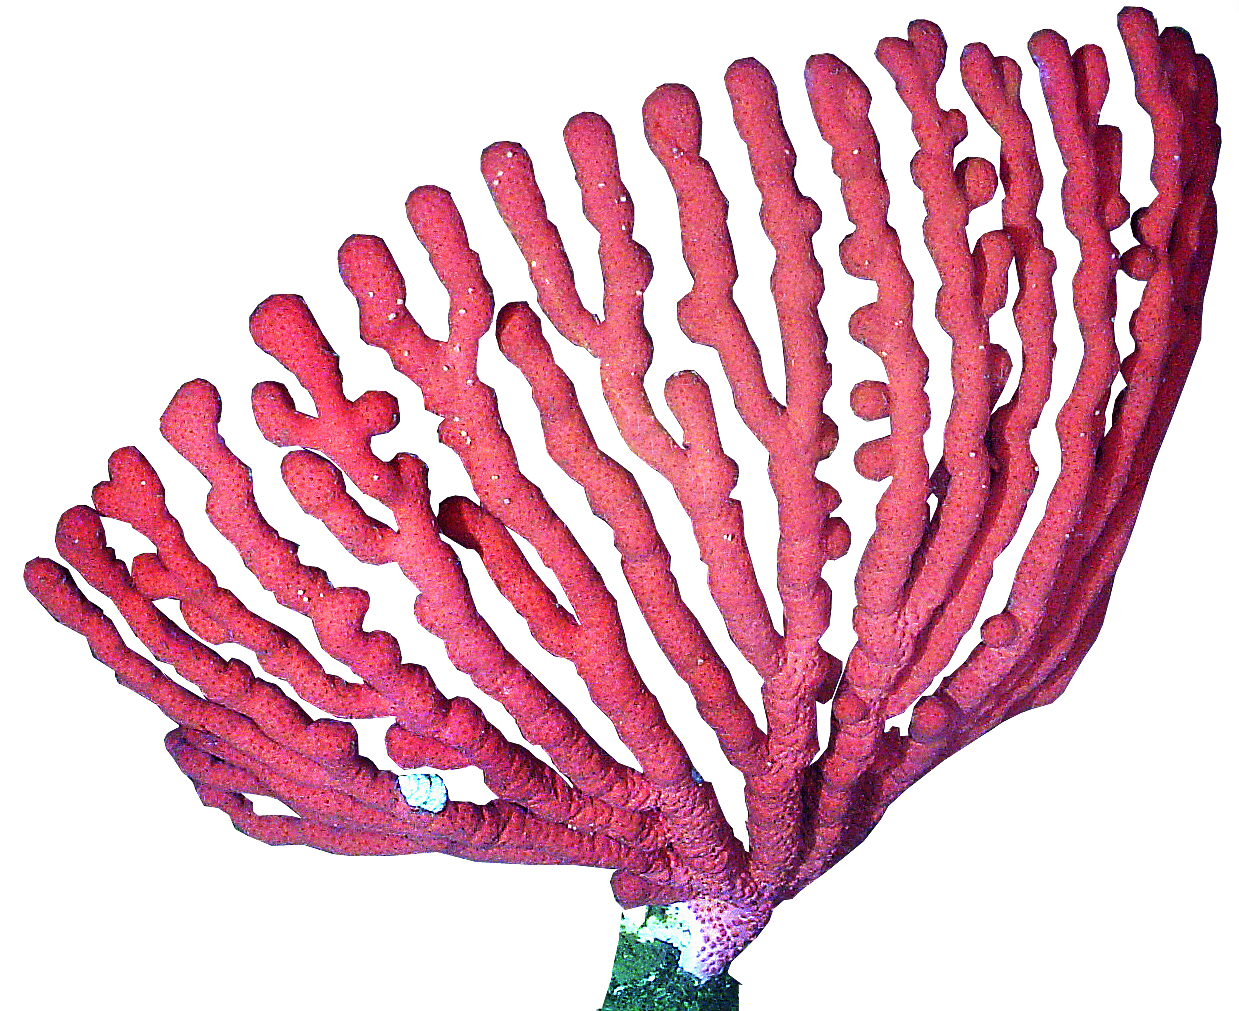 Imagens de coral png